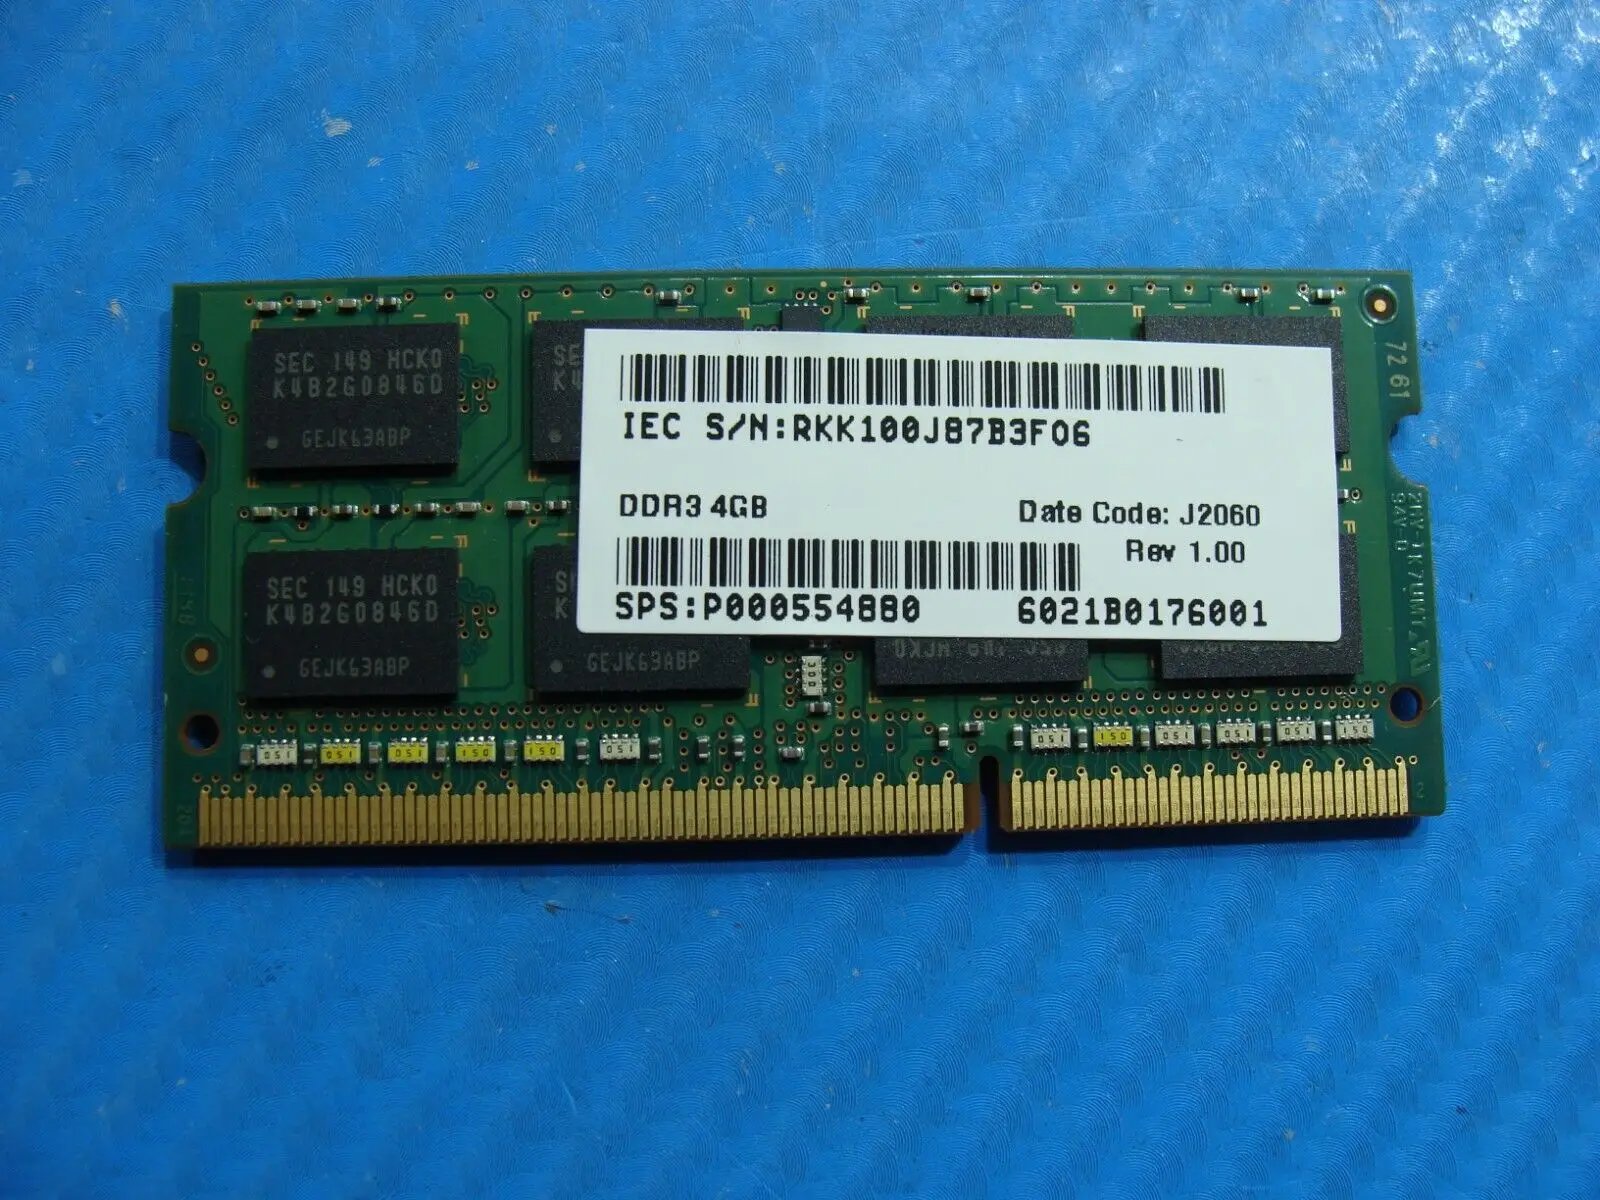 Toshiba P875-S7200 So-Dimm Samsung 4GB 2Rx8 Memory PC3-12800S M471B5273DH0-CK0